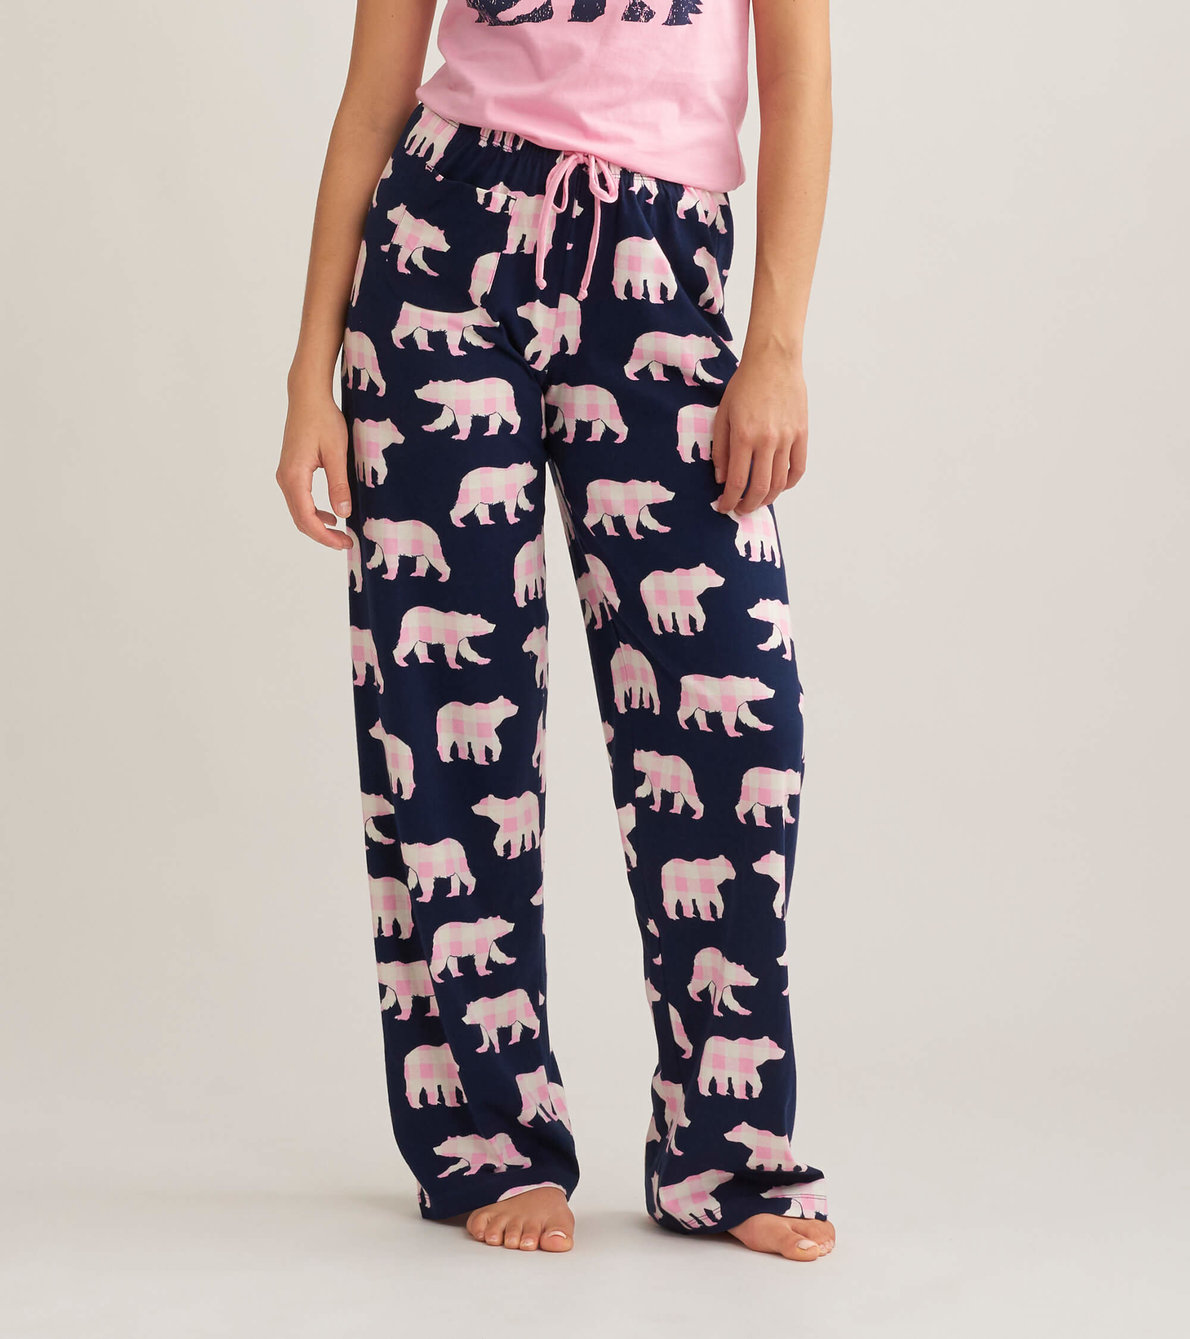 View larger image of Mama Bear Women's Jersey Pajama Pant